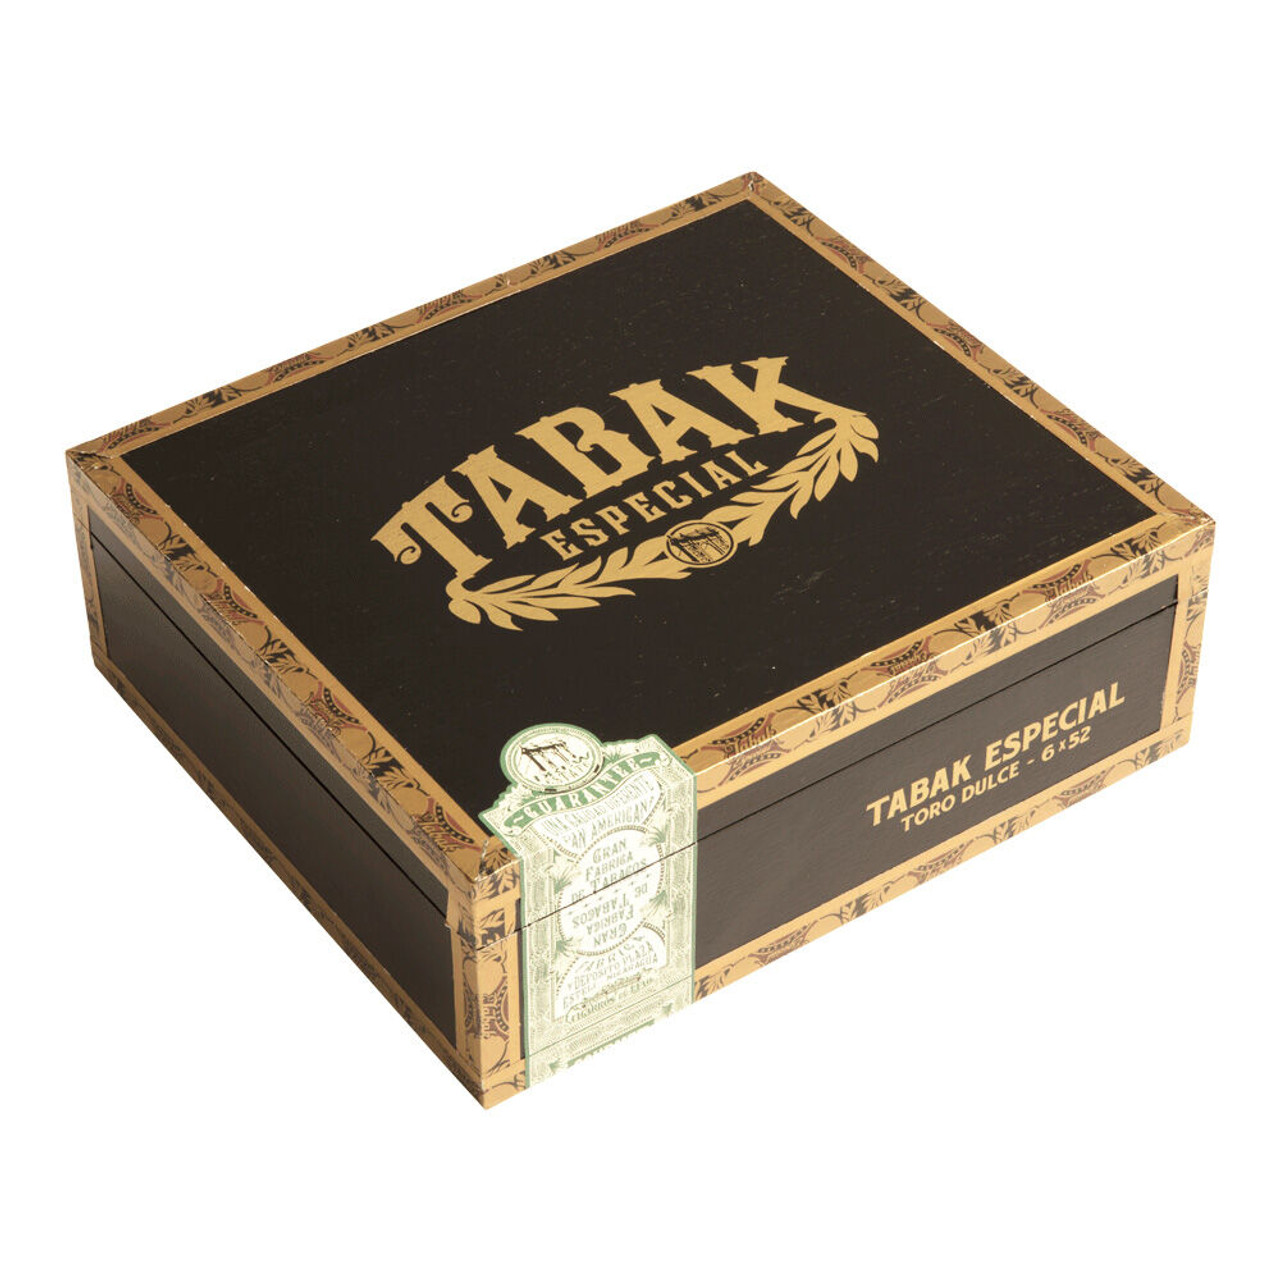 Tabak Especial by Drew Estate Toro Dulce Cigars - 6 x 52 (Box of 24) *Box